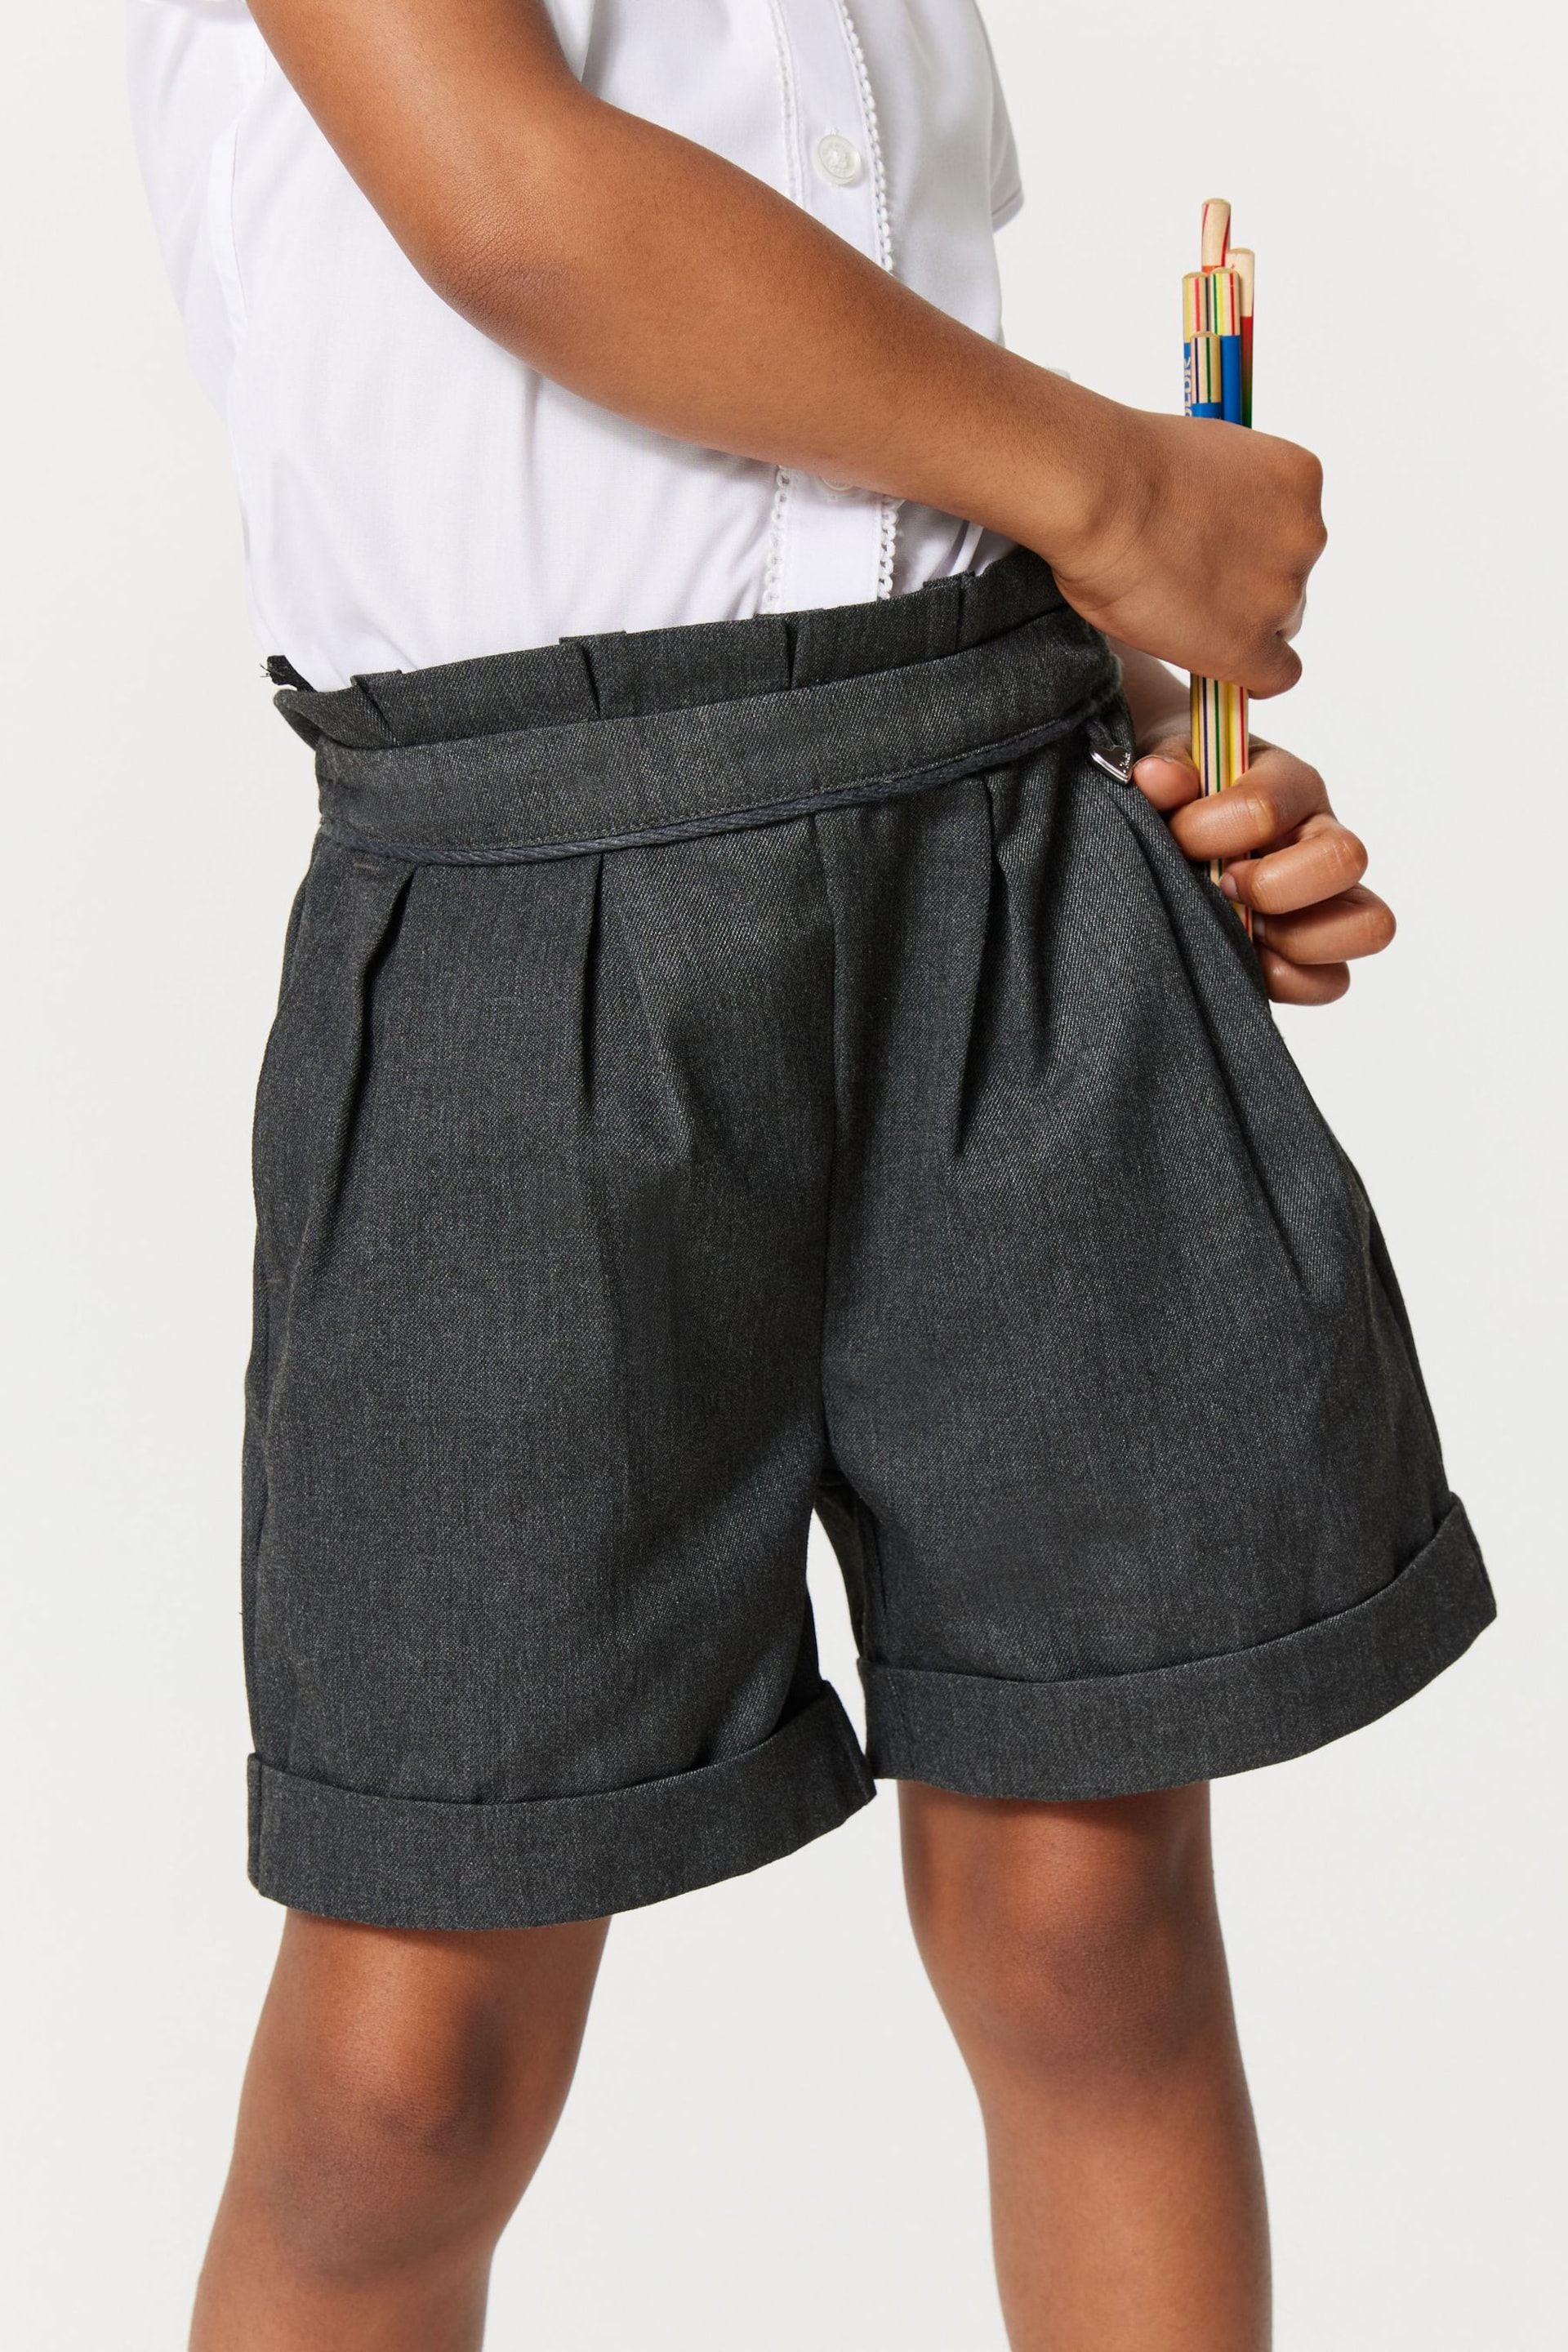 Clarks Grey Paperbag School Shorts - Image 1 of 9